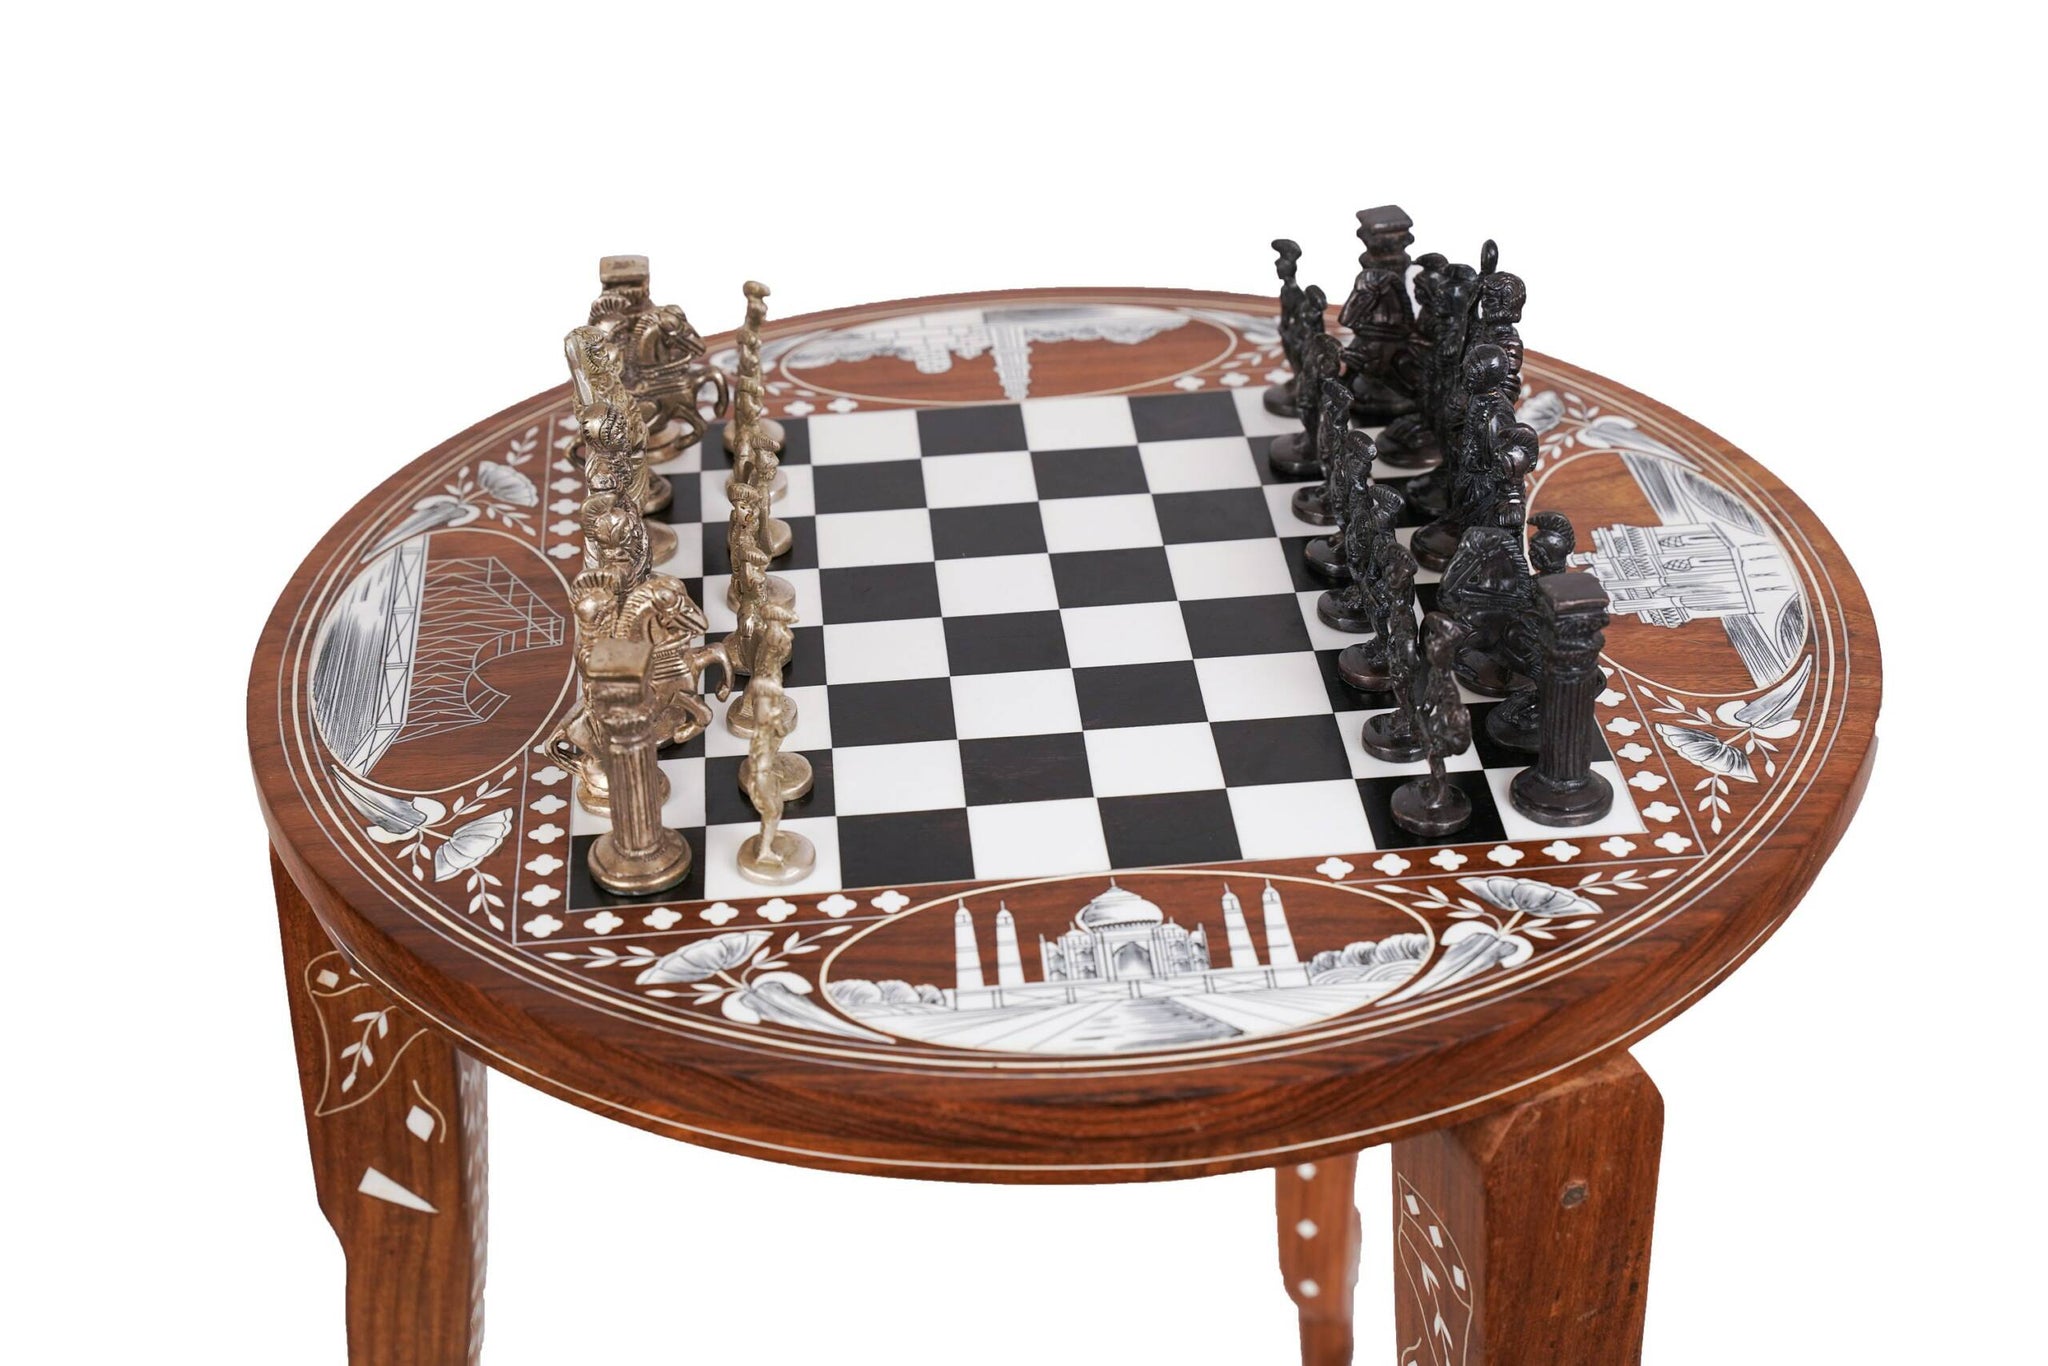 Handmade Wood Chess Table with Bone Inlay